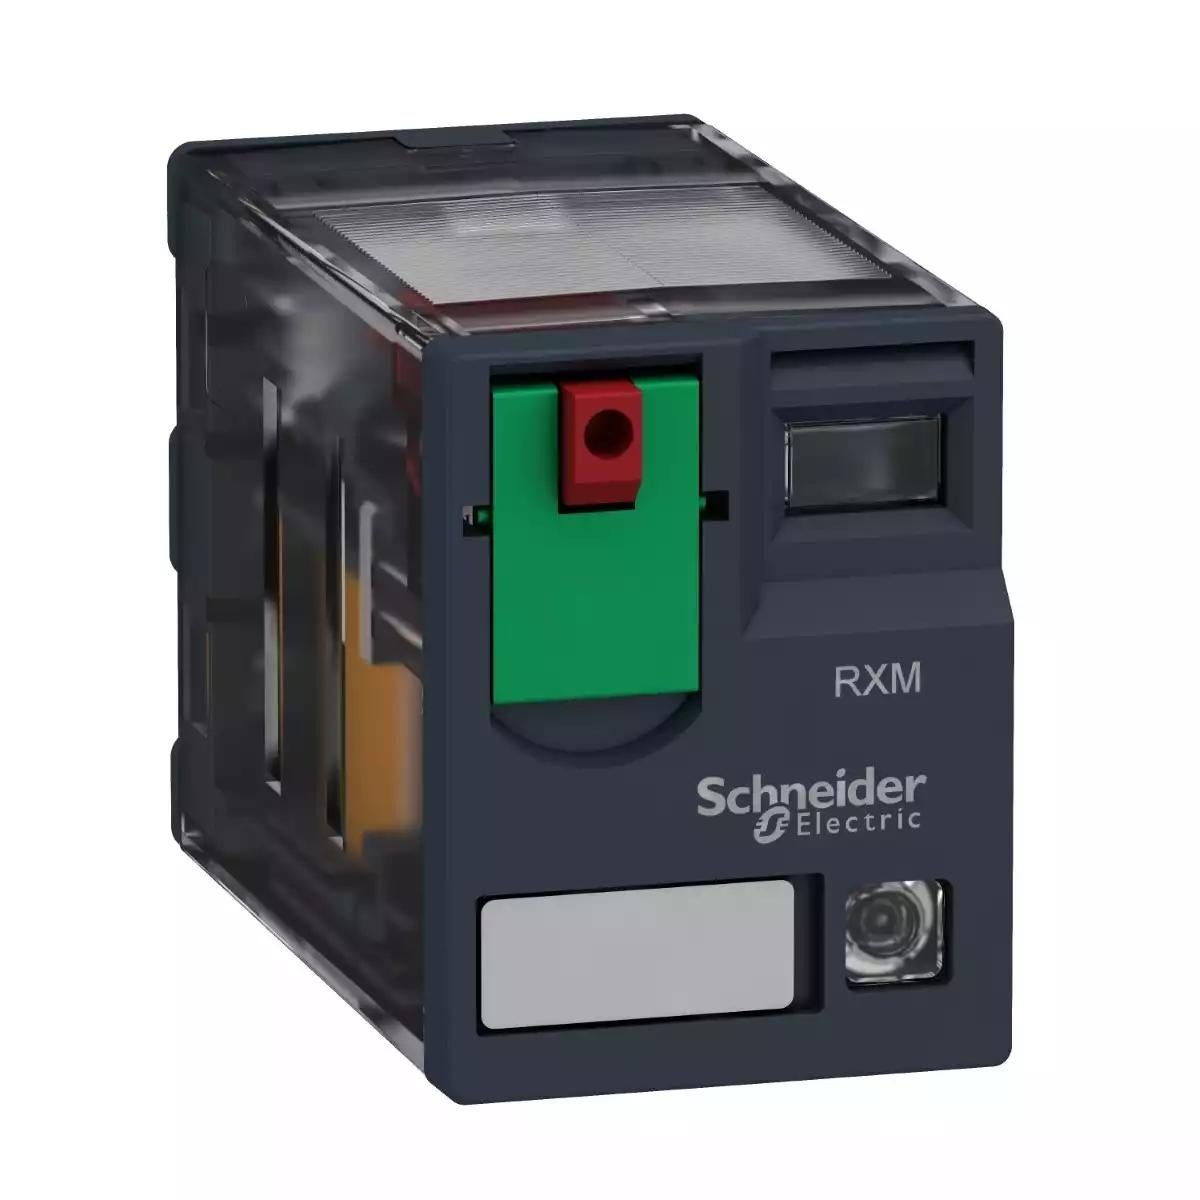 Schneider Electric Zelio RXM - Relay Miniature Plug-in relay 3 C/O 230 V AC 10 A with LED